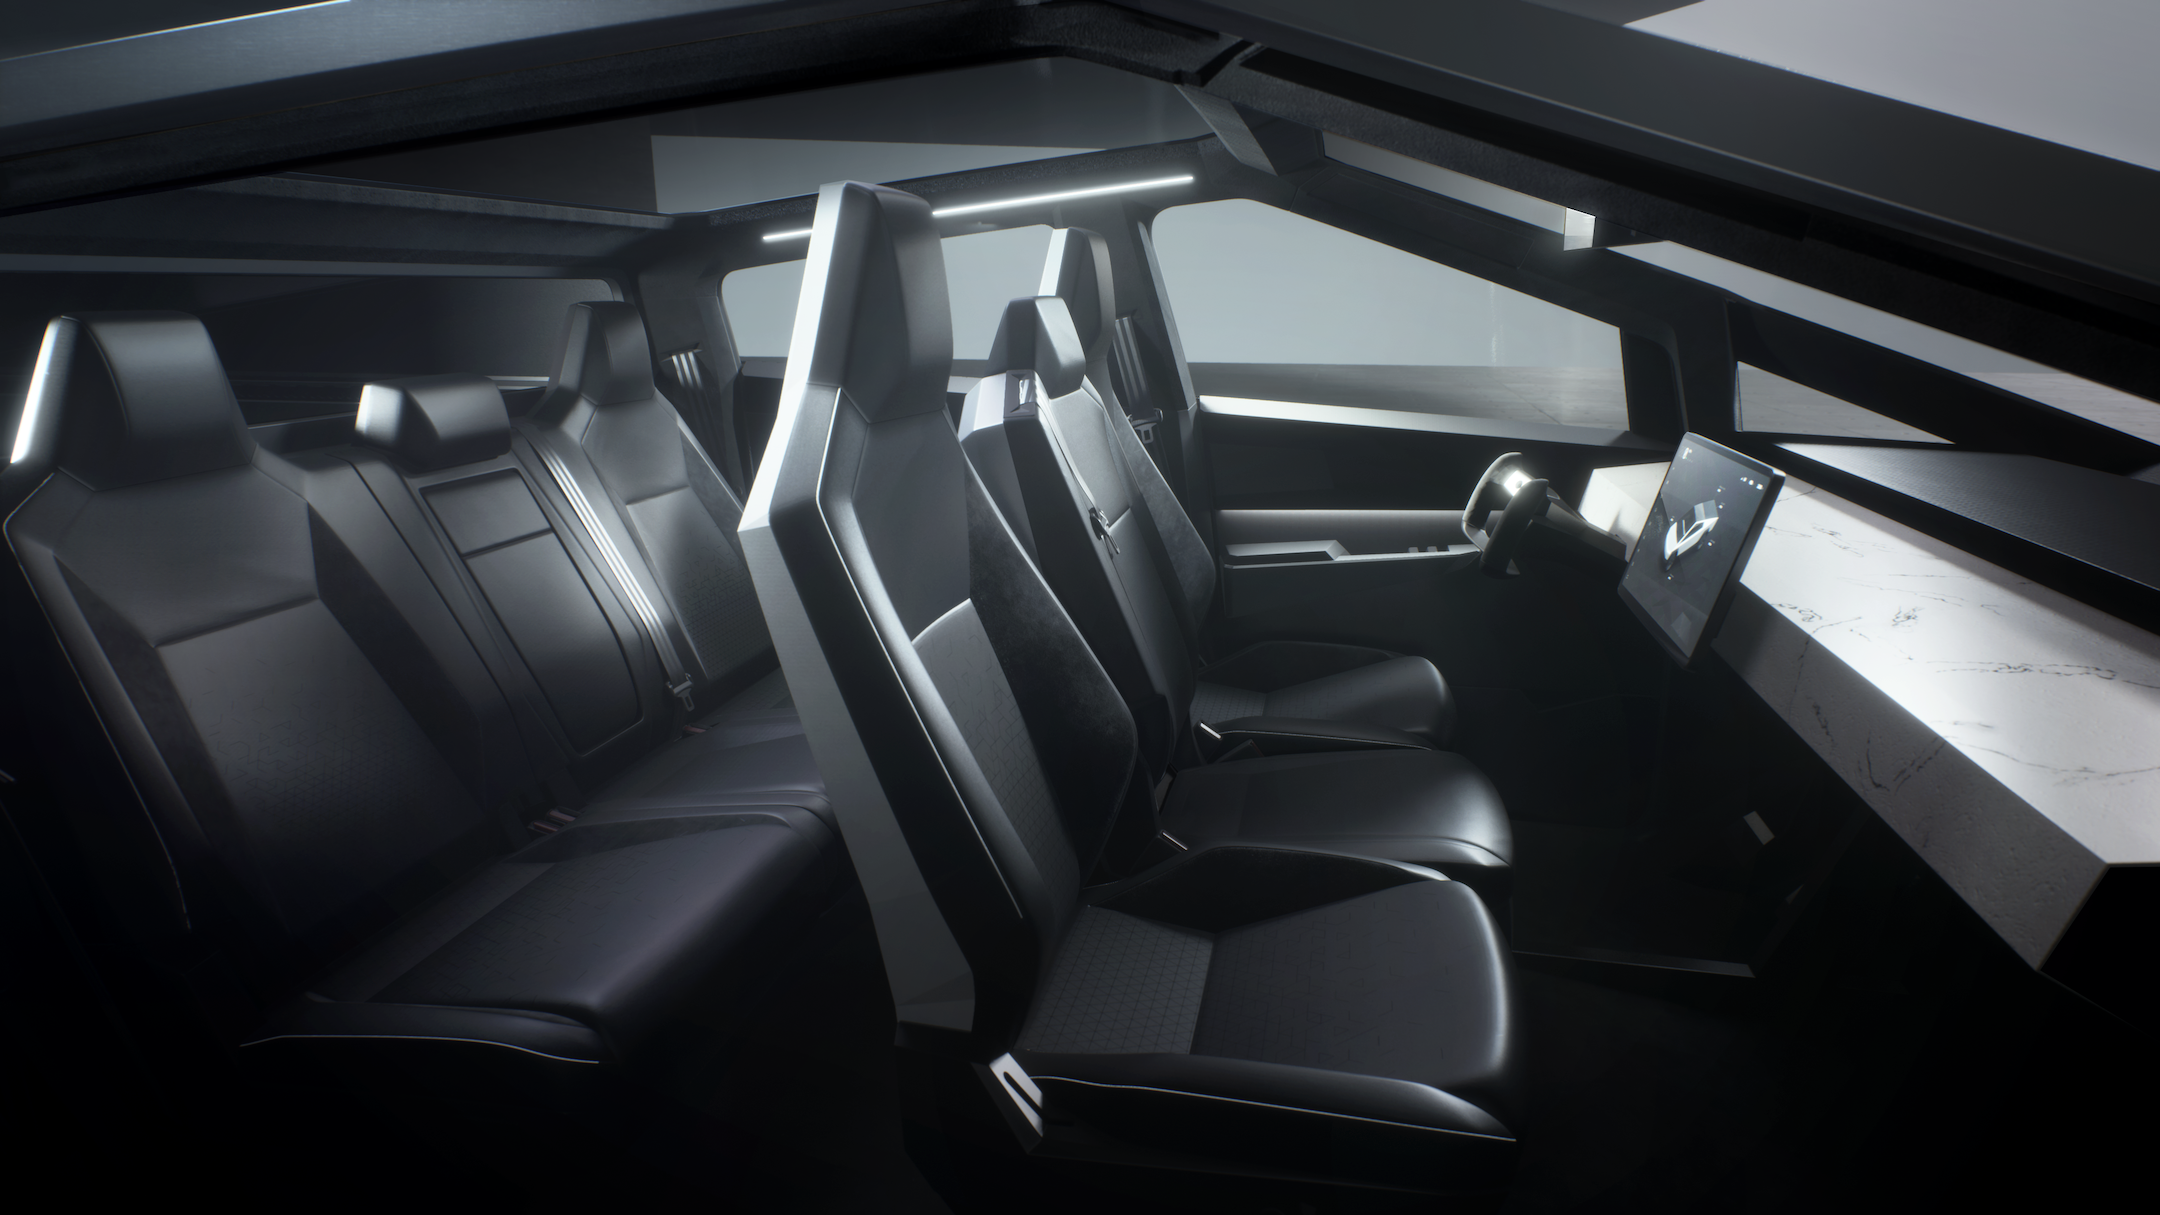 The Tesla Cybertruck interior has a 17-inch screen.